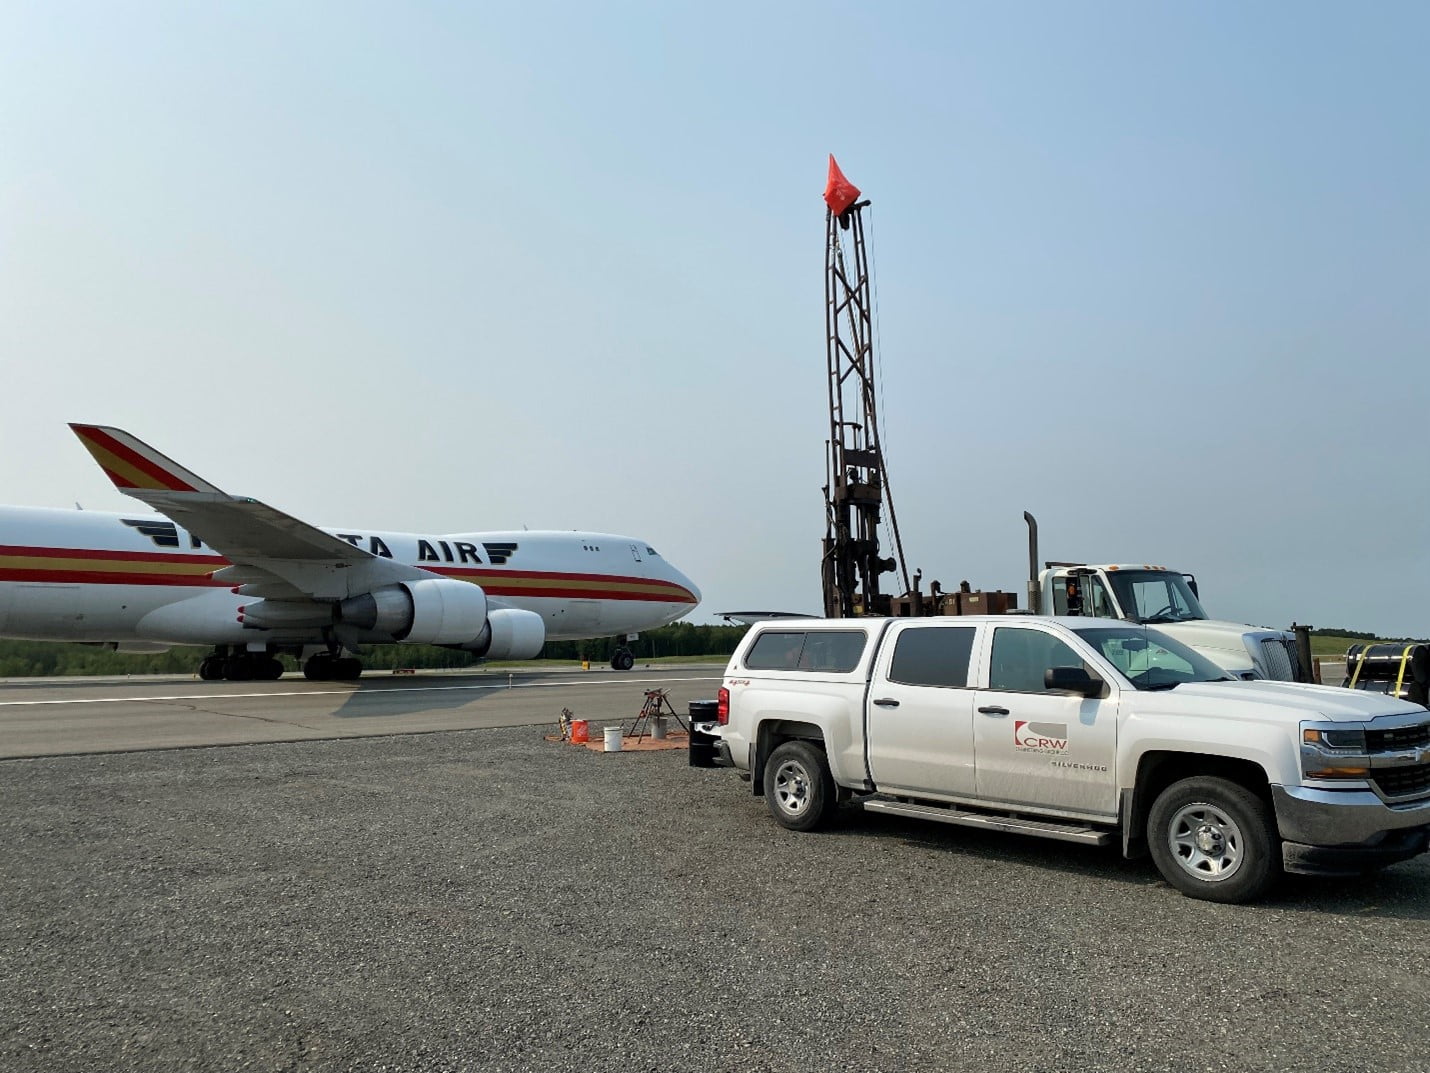 Photo of plane on runway, CRW truck, and drilling equipment